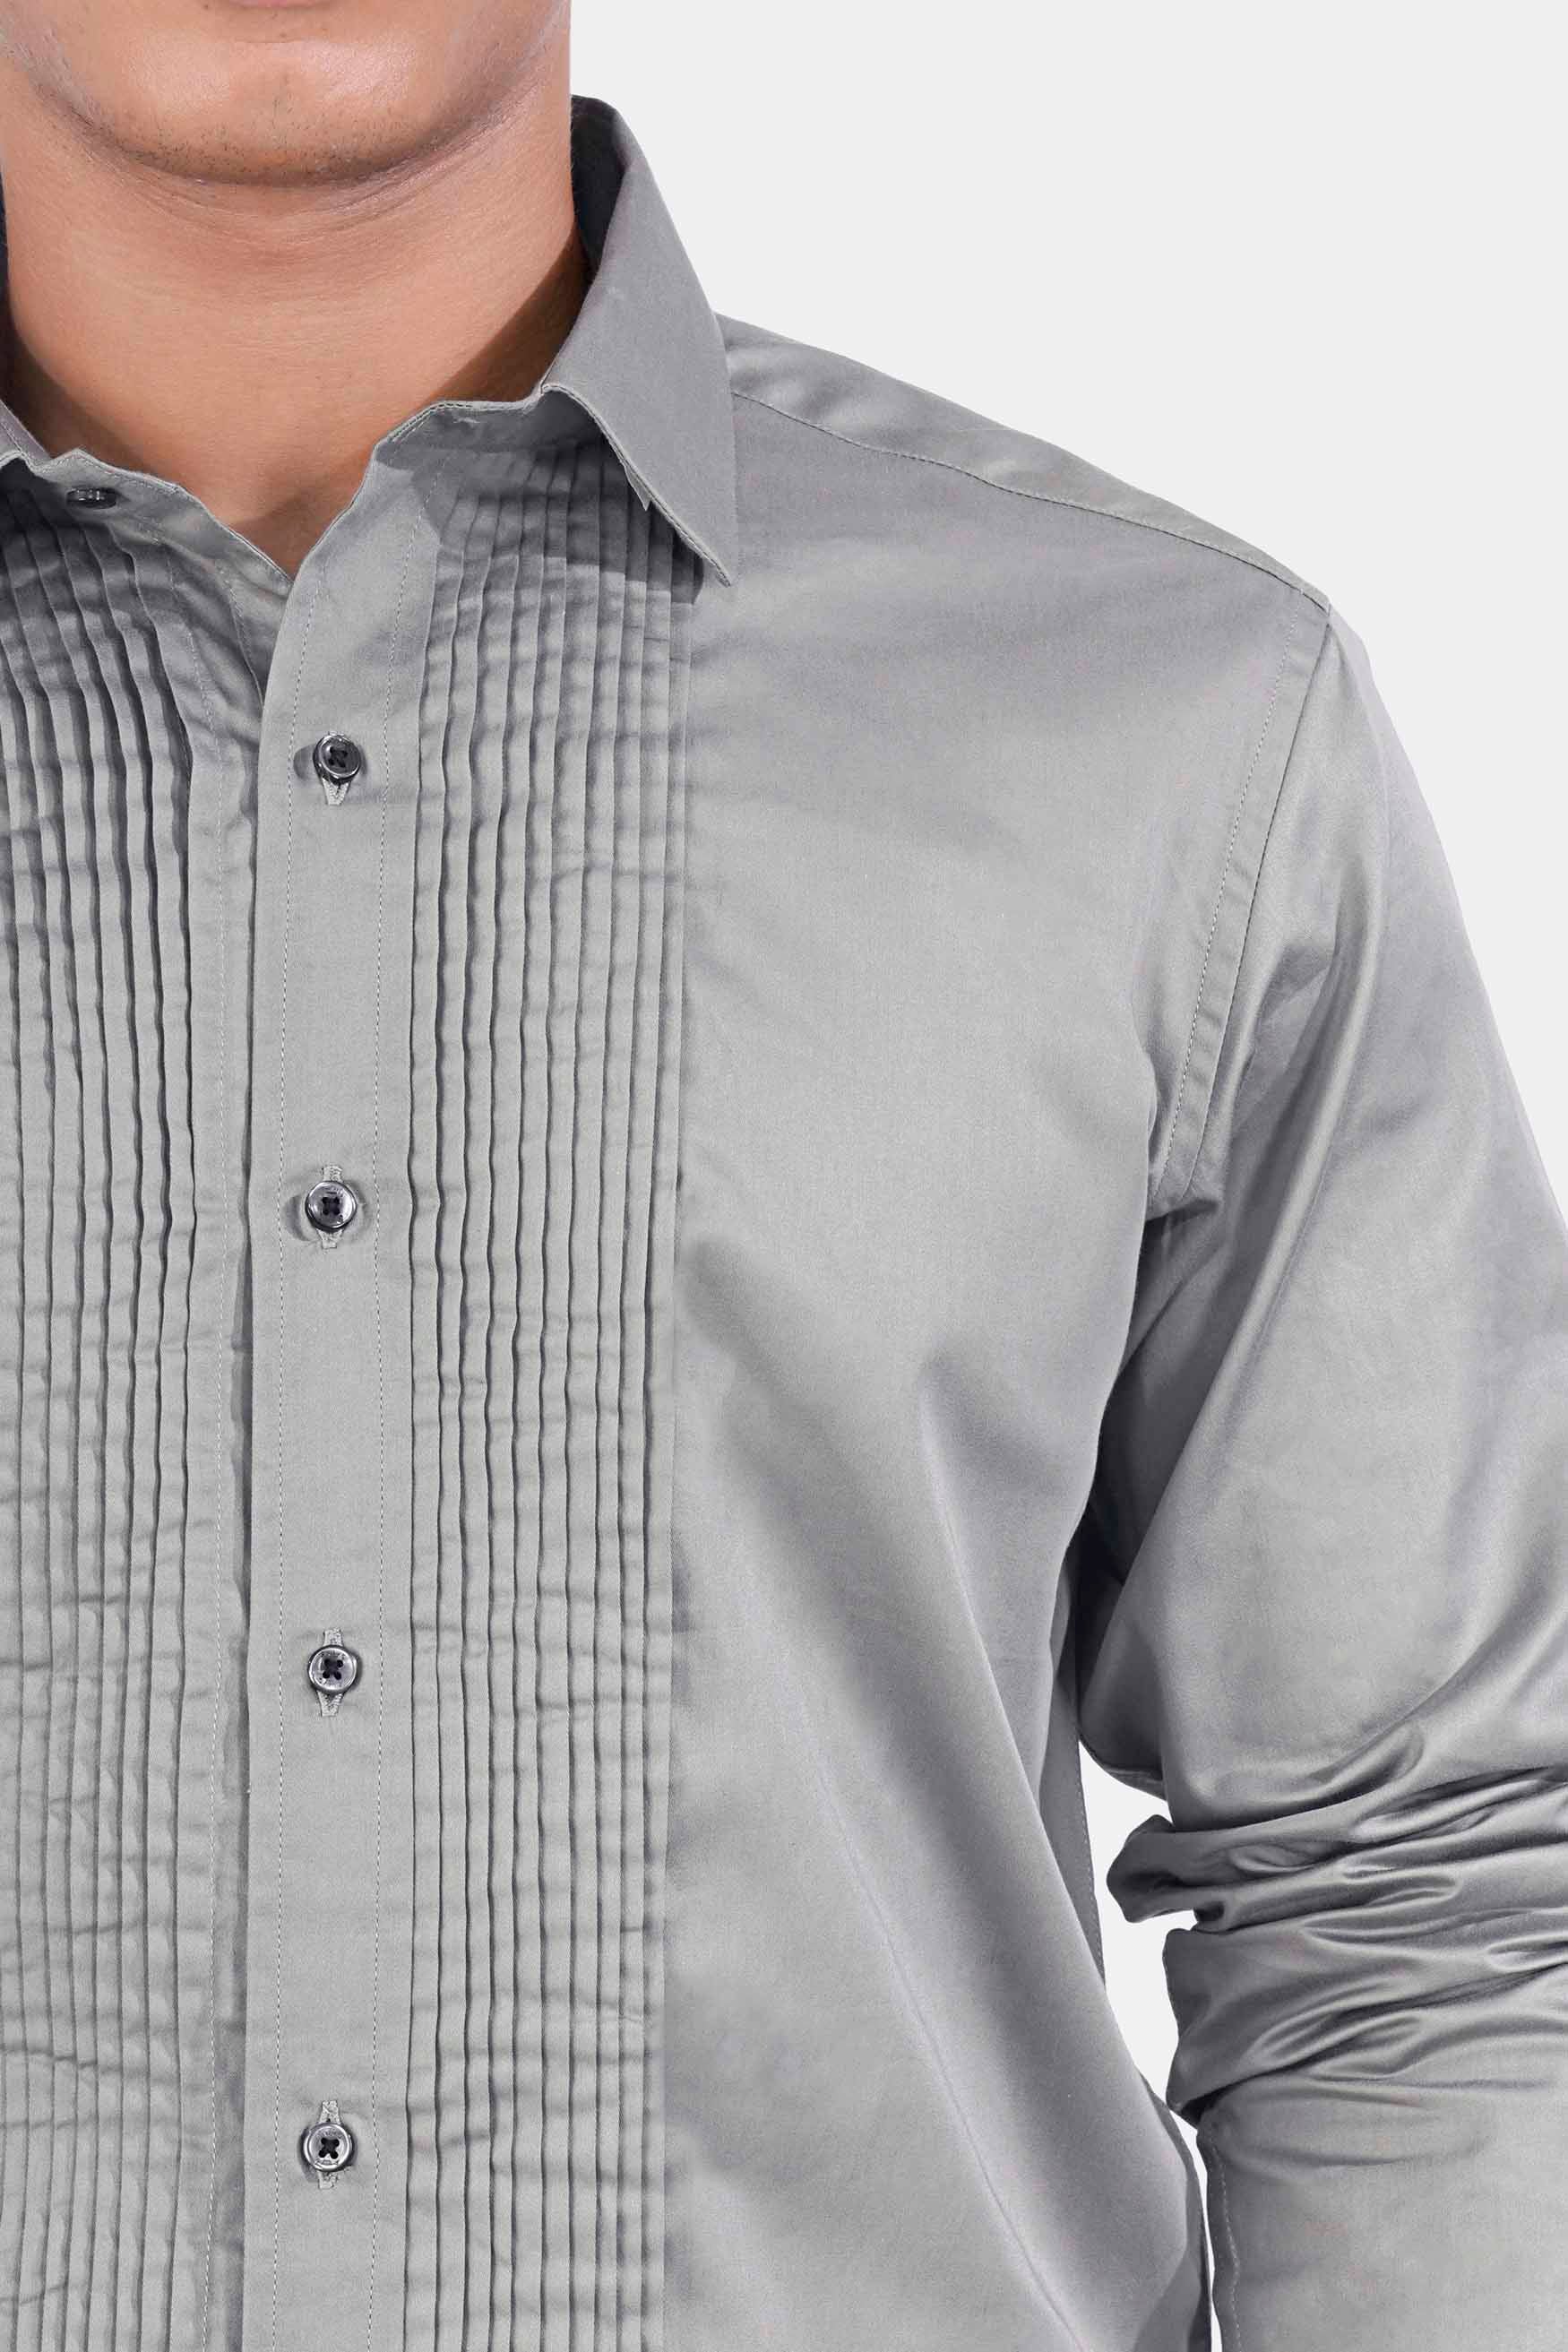 Chalice Gray Subtle Sheen Super Soft Premium Cotton Tuxedo Shirt